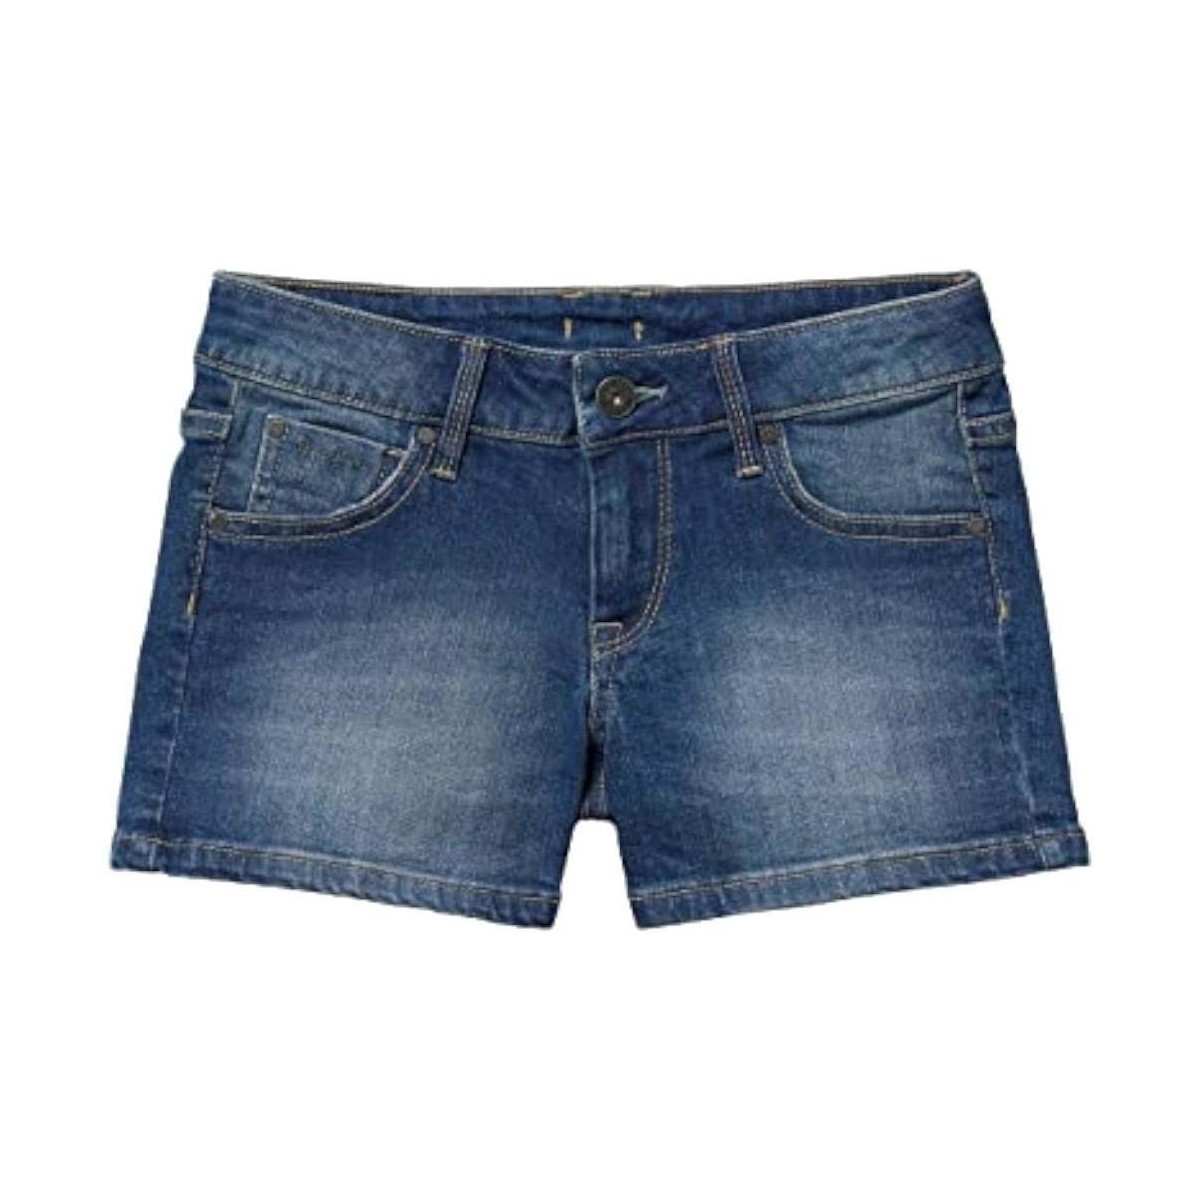 Shorts & Βερμούδες Pepe jeans -